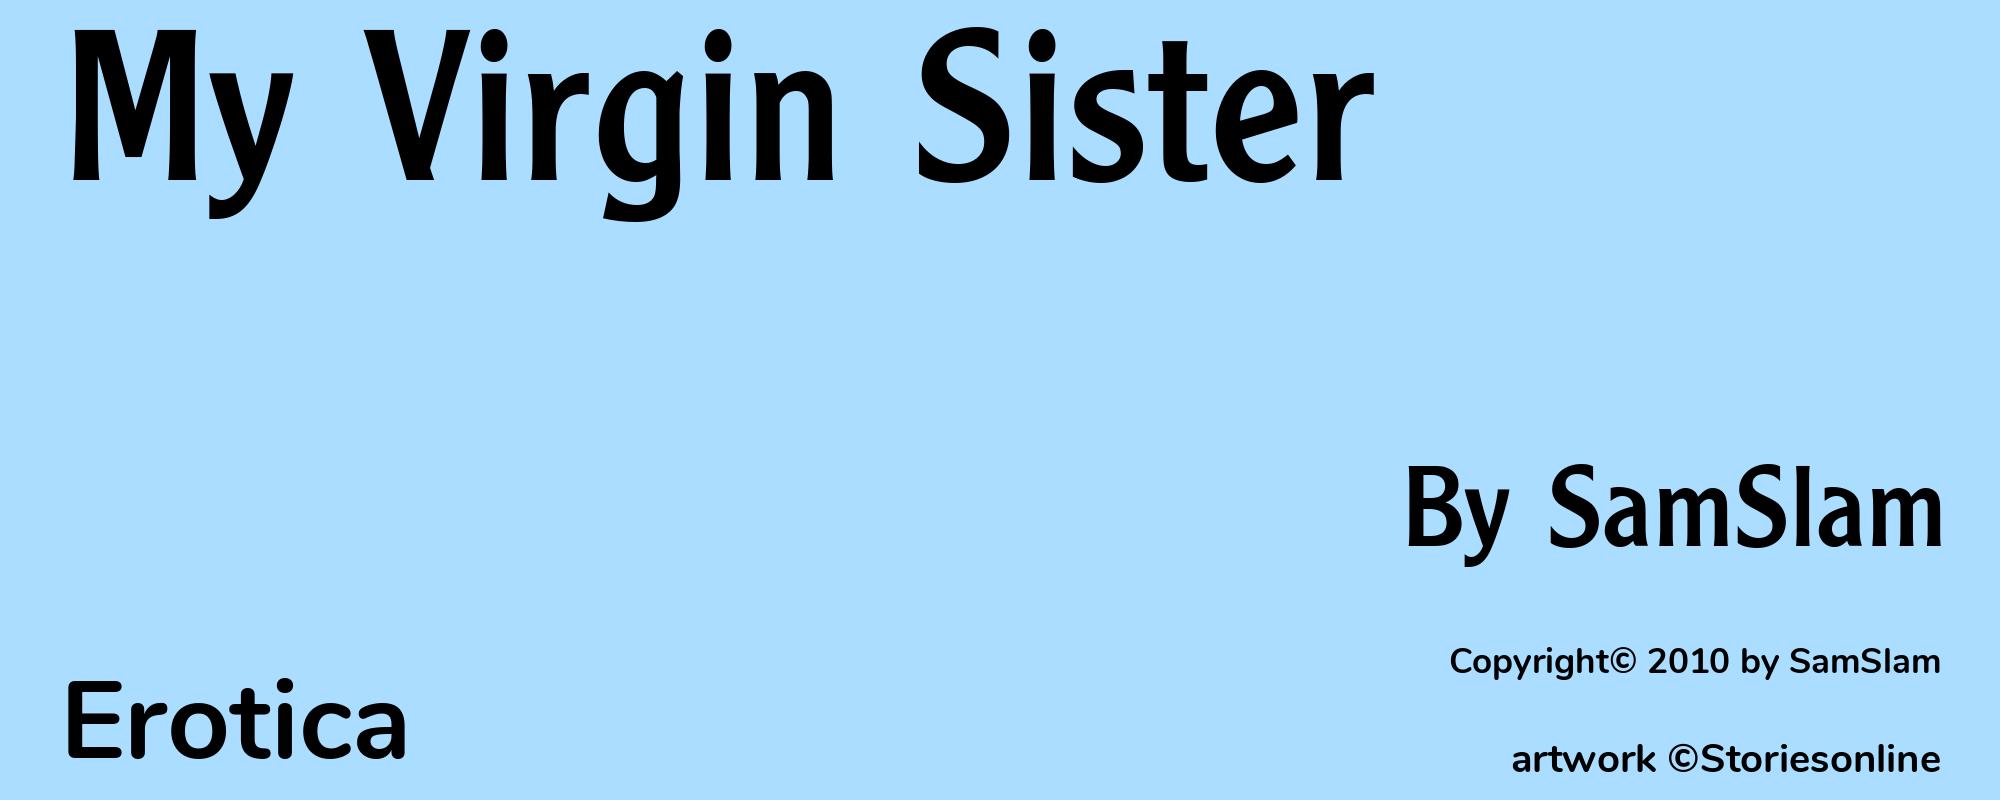 My Virgin Sister - Cover